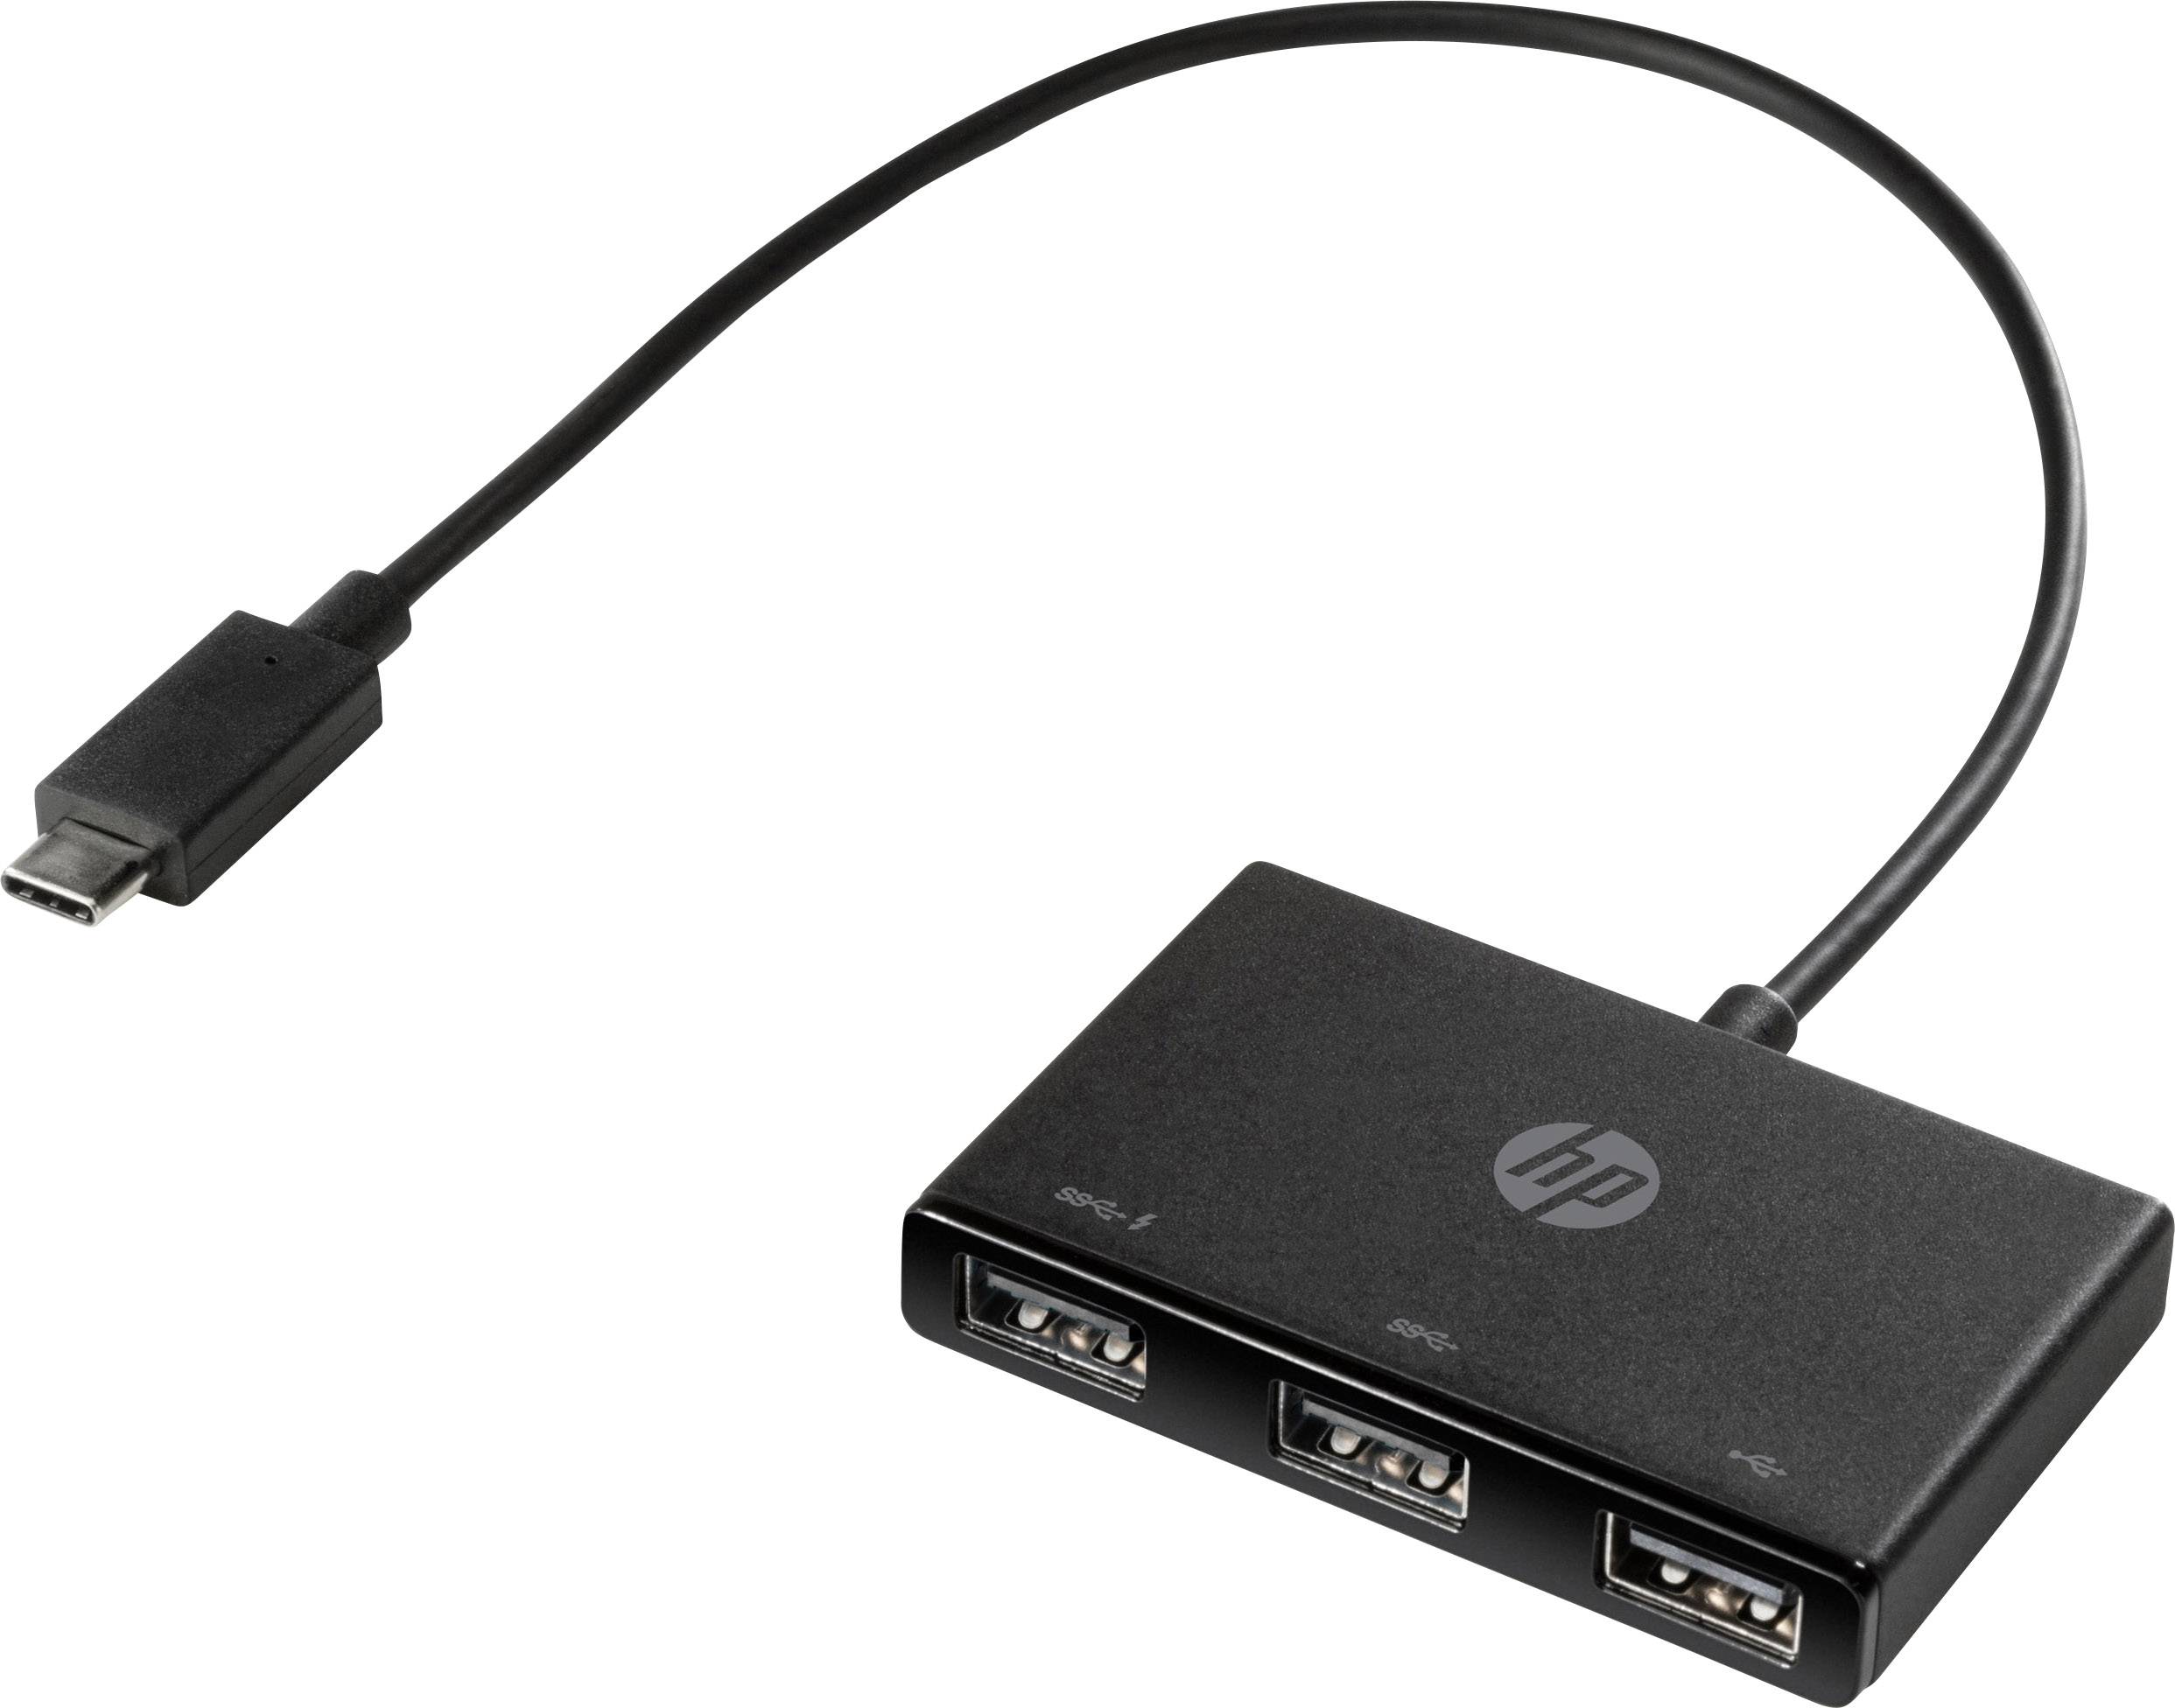 HP USB-C TO USB-A HUB